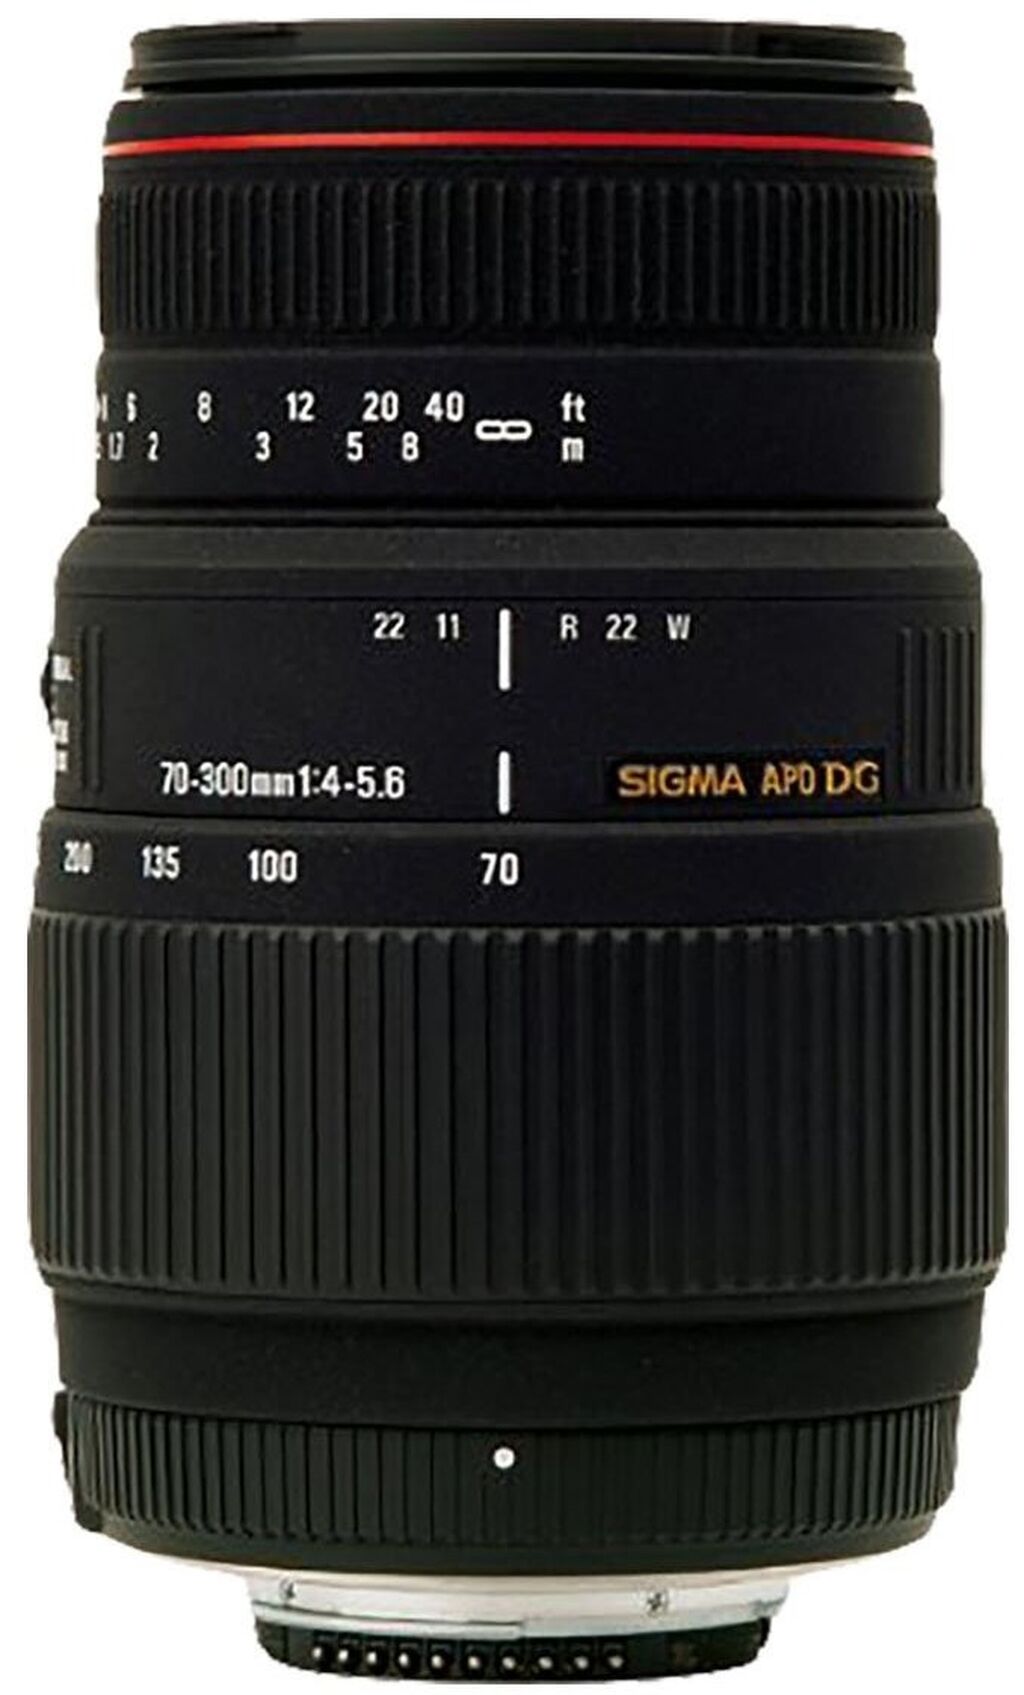 Sigma dg 70 300mm. Sigma 70-300 4-5.6 Nikon. Sigma 70-300mm d 1:4-5.6 apo DG. Sigma af 70-300mm f/4-5.6 apo macro DG Nikon f. 70-300 DG macro 4-5.6 apo Sigma.